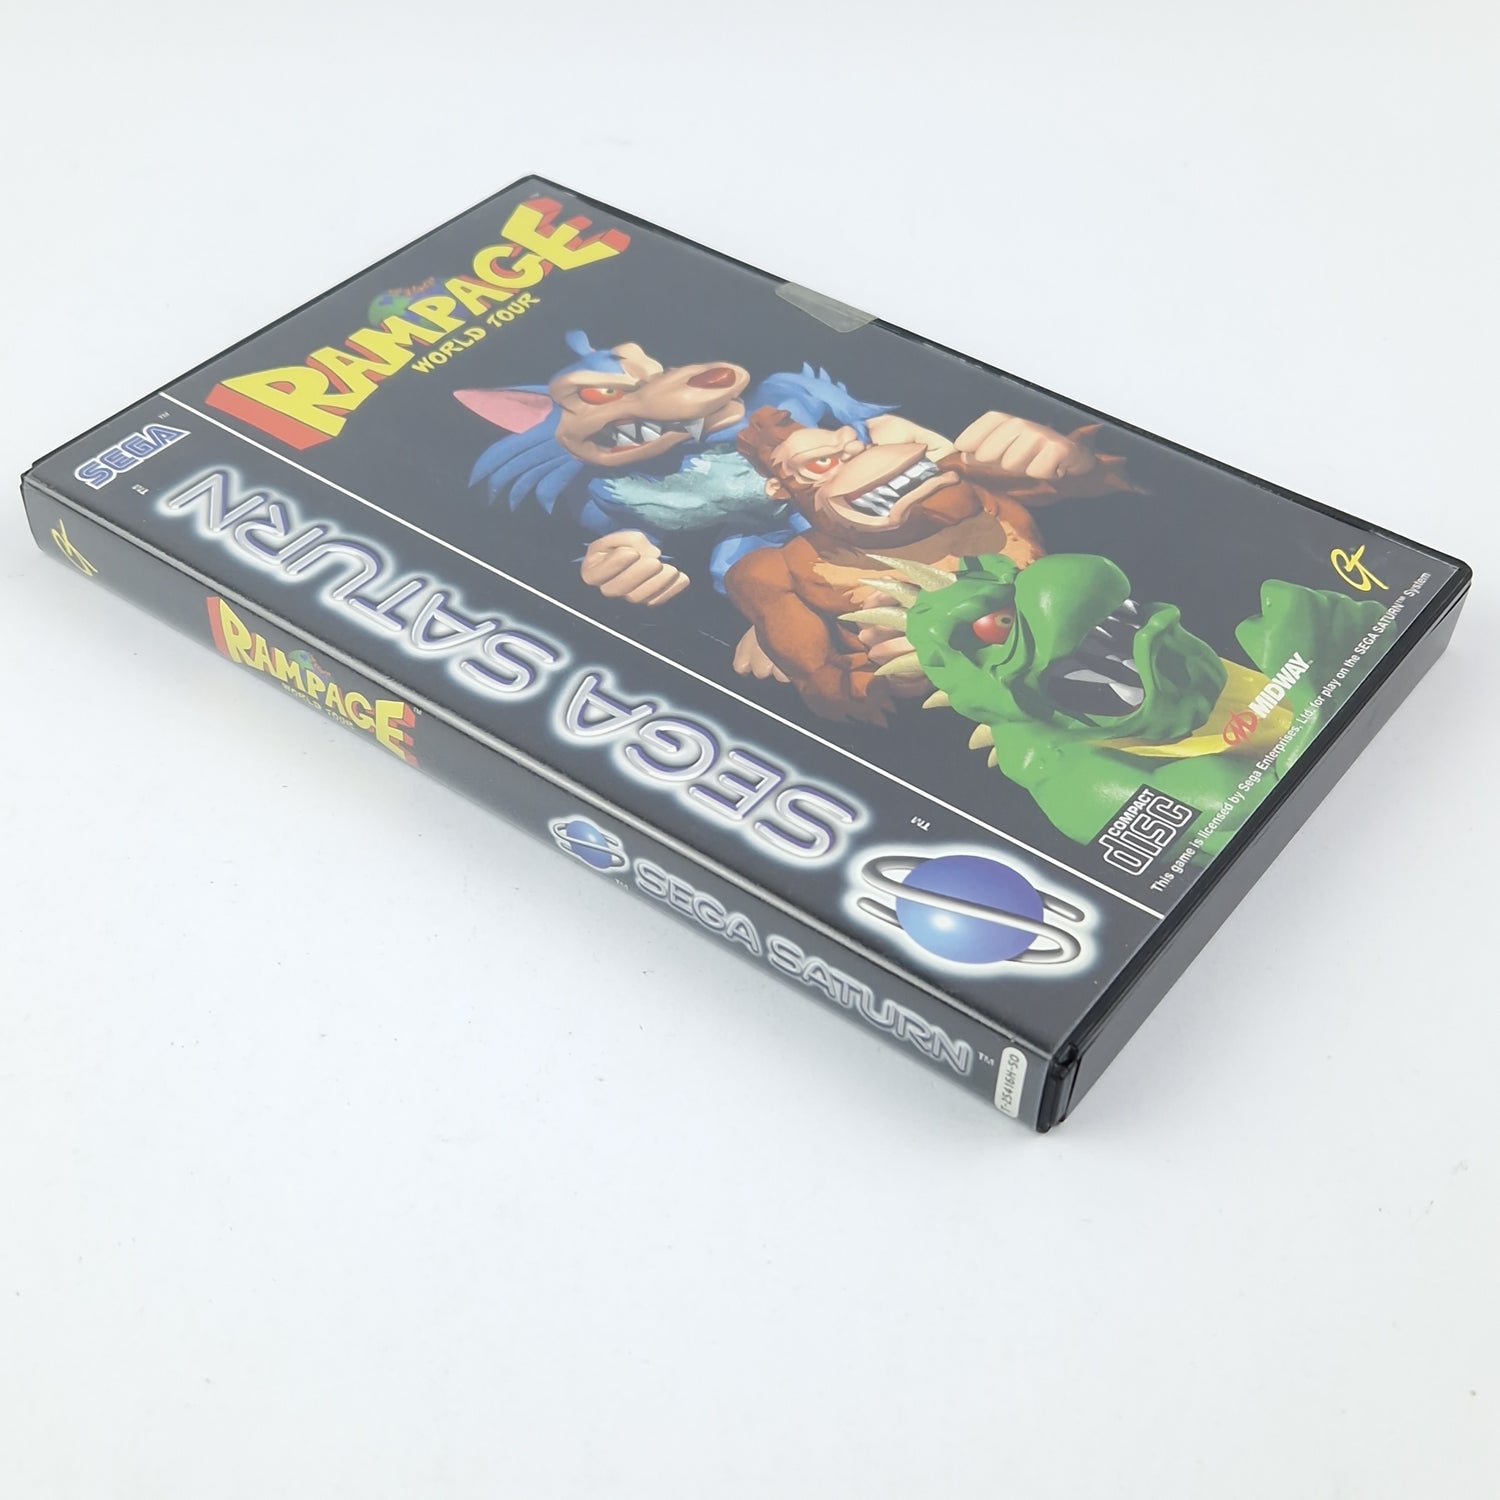 Sega Saturn Game: Rampage World Tour - CD Instructions OVP cib / PAL Disk